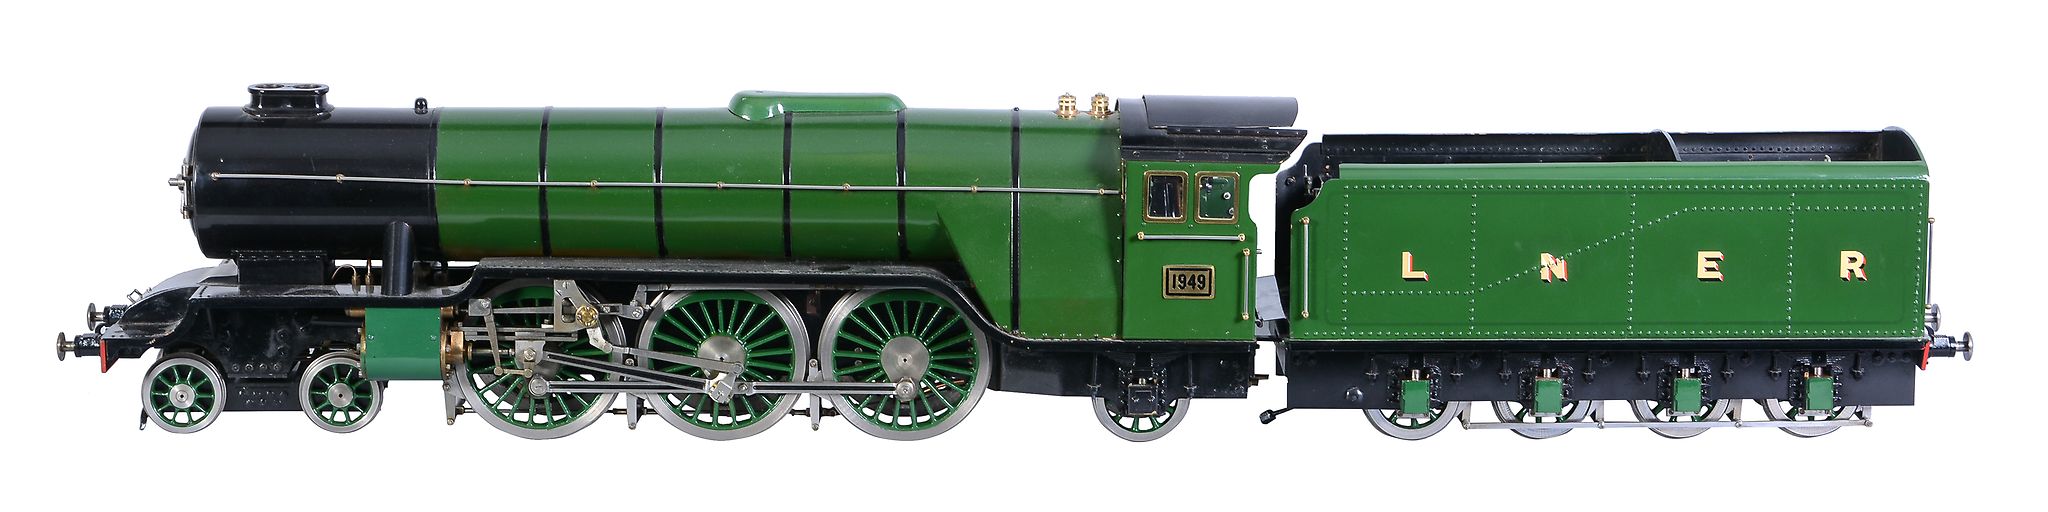 An Exhibition quality model of a 3 Â½ inch gauge 4-6-2 LNER tender locomotive No 1949 'Highland